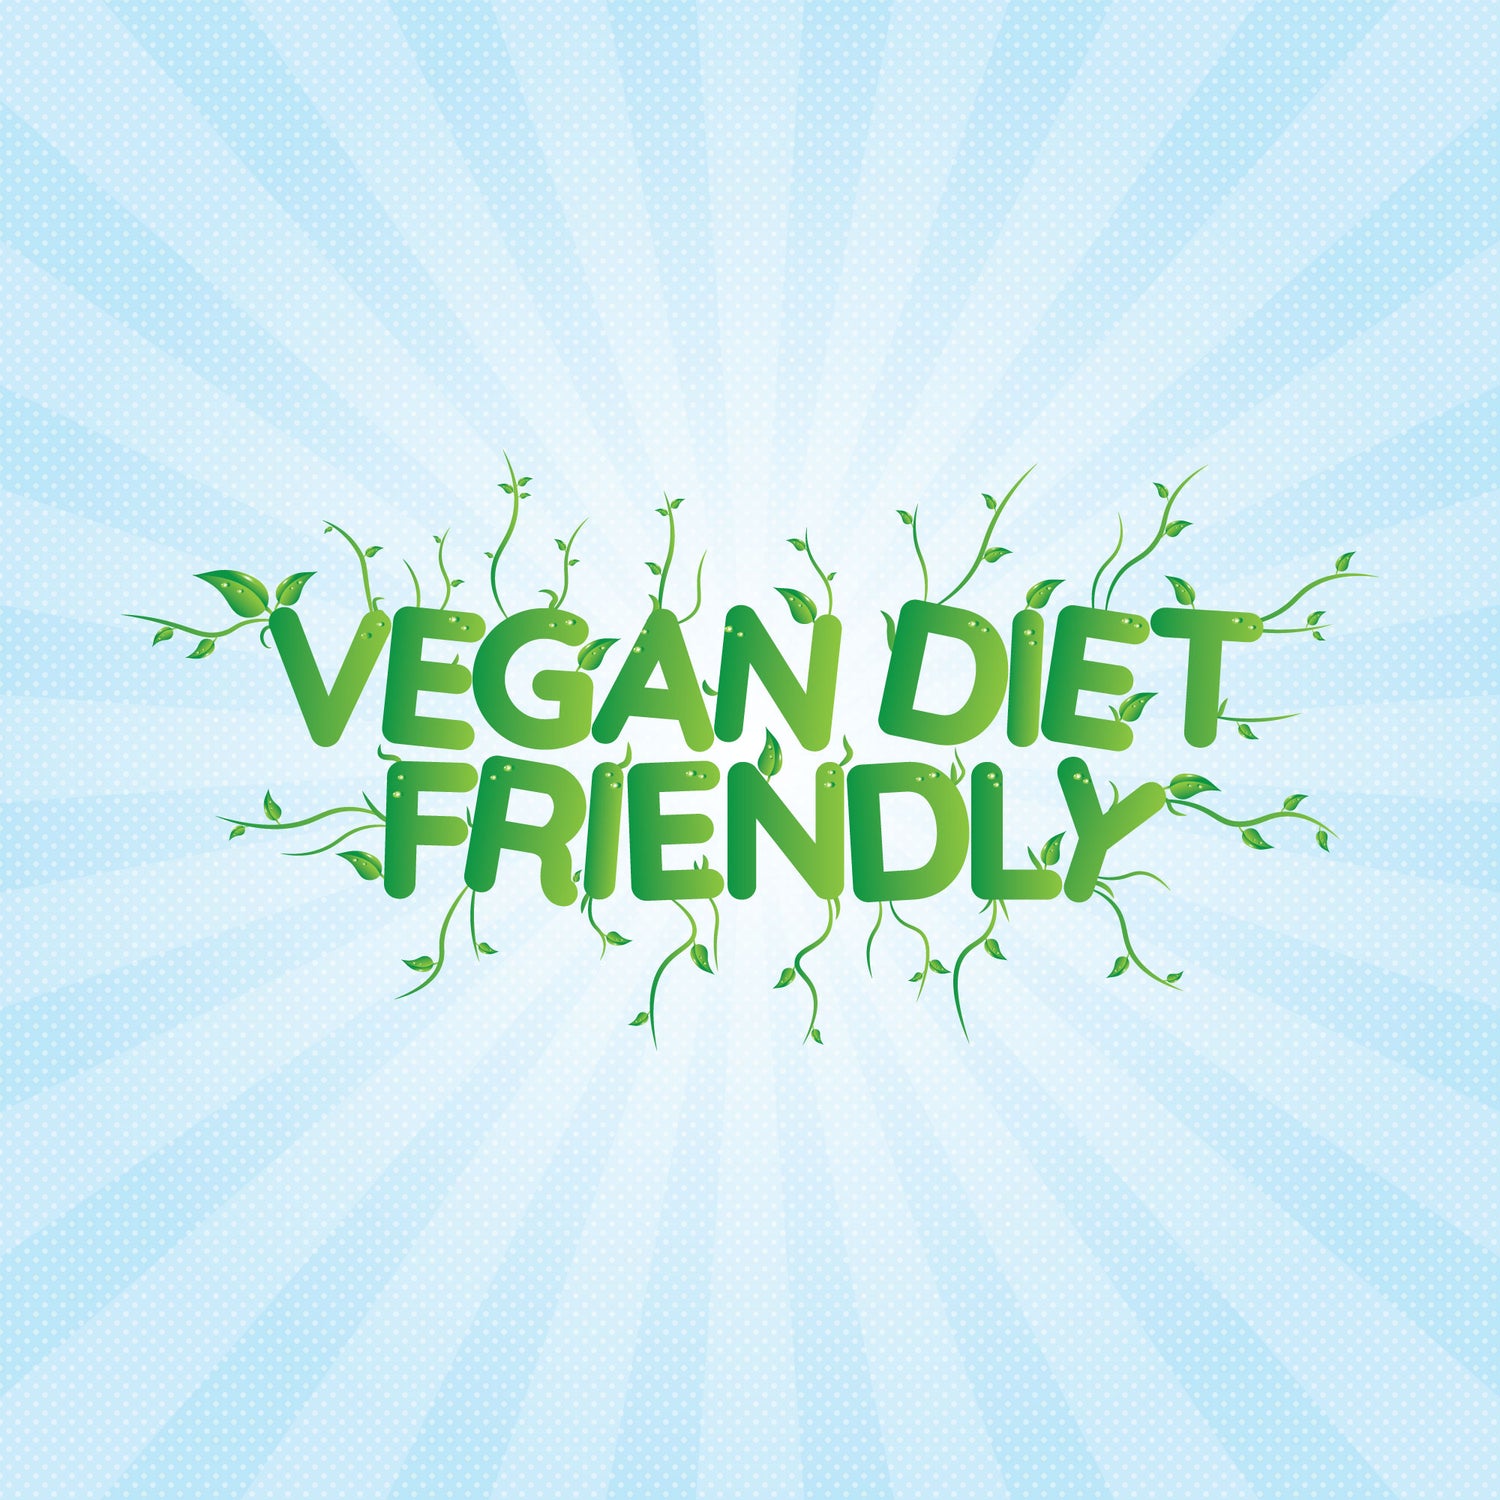 Vegan Diet Friendly